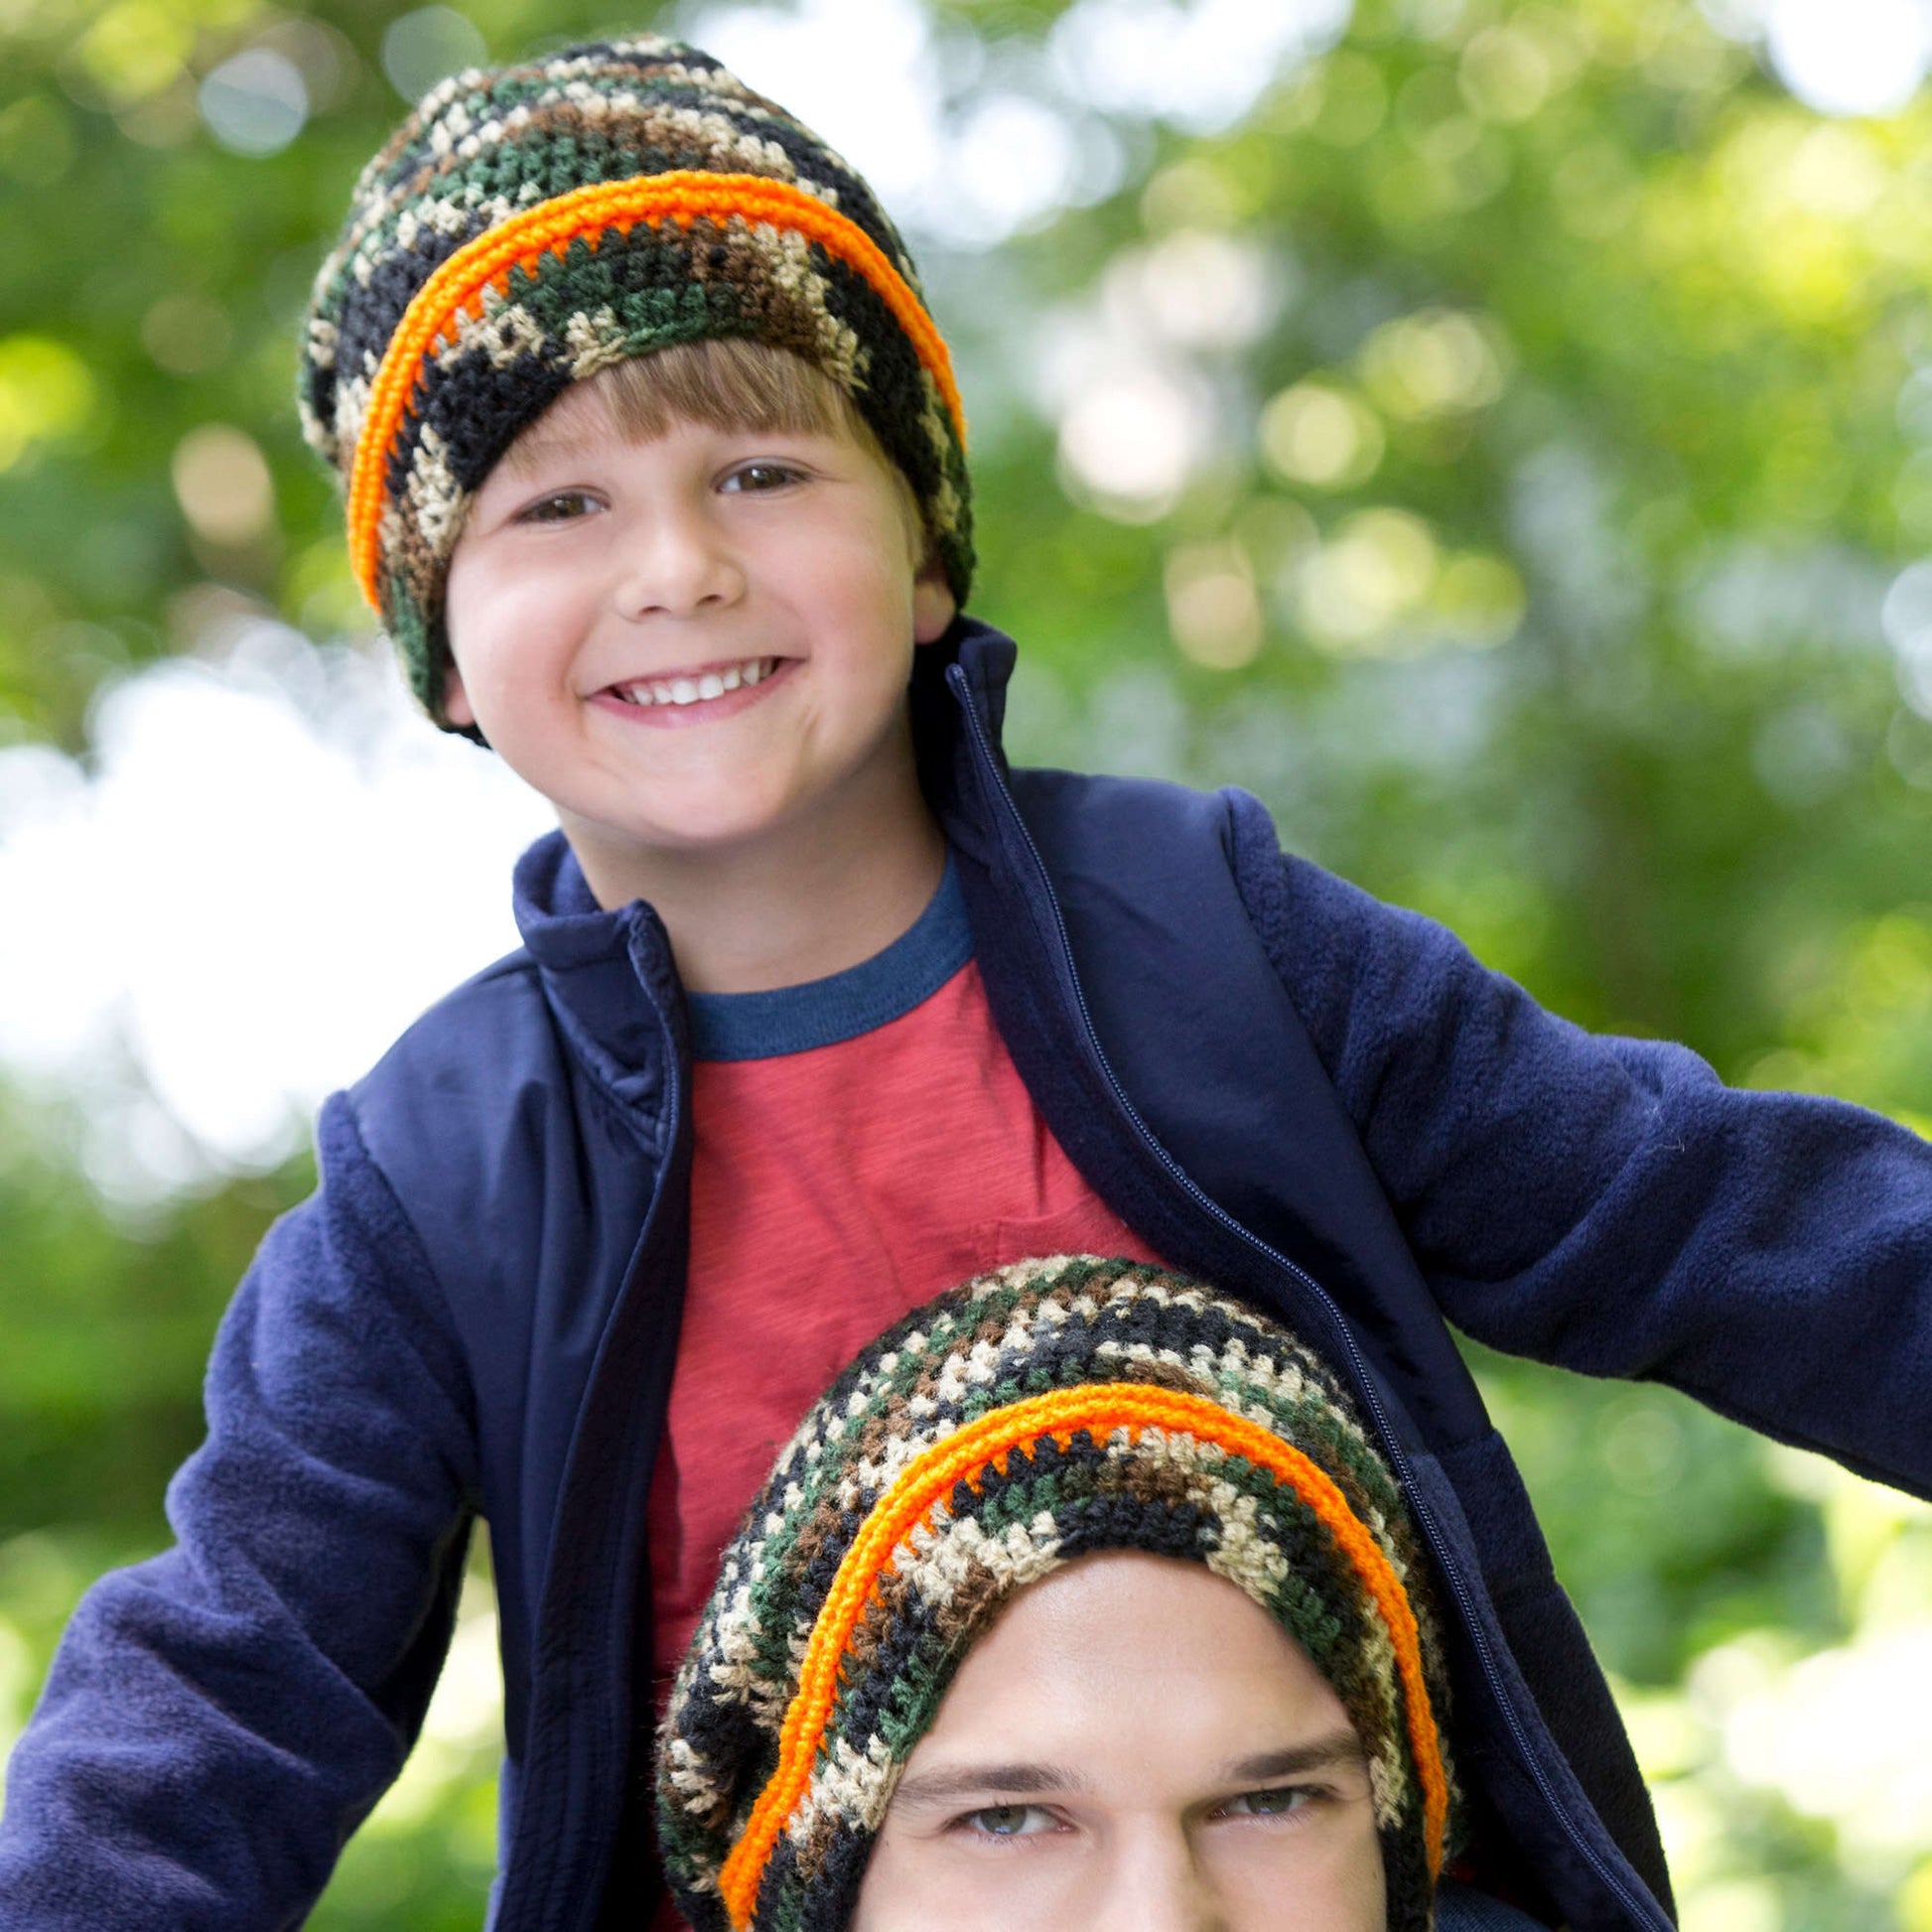 Free Red Heart Dad & Son Camo Hats Crochet Pattern